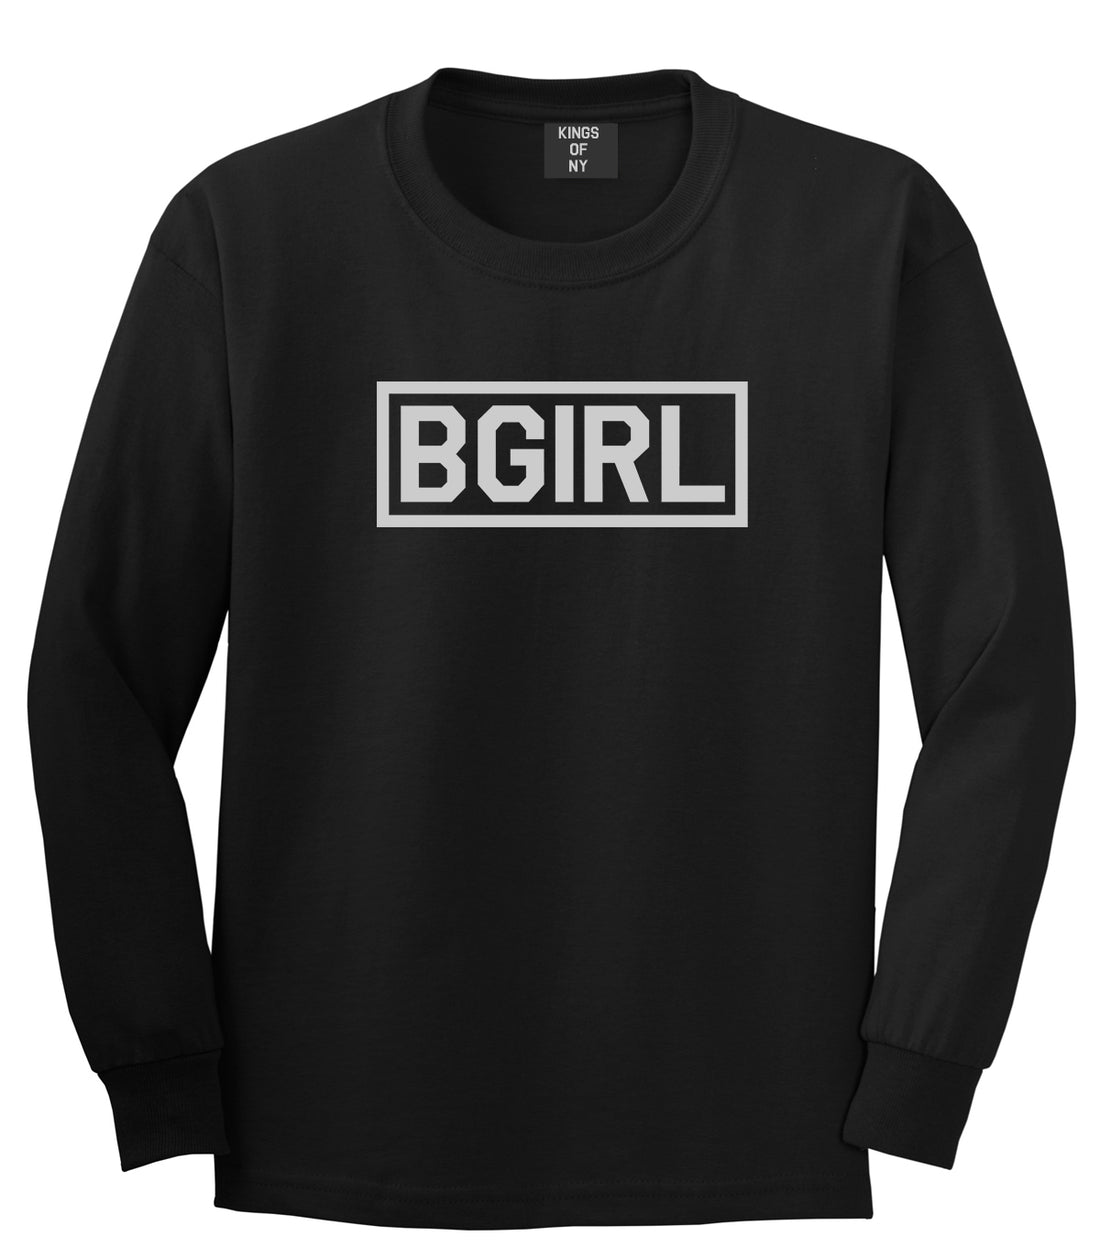 Bgirl Breakdancing Black Long Sleeve T-Shirt by Kings Of NY